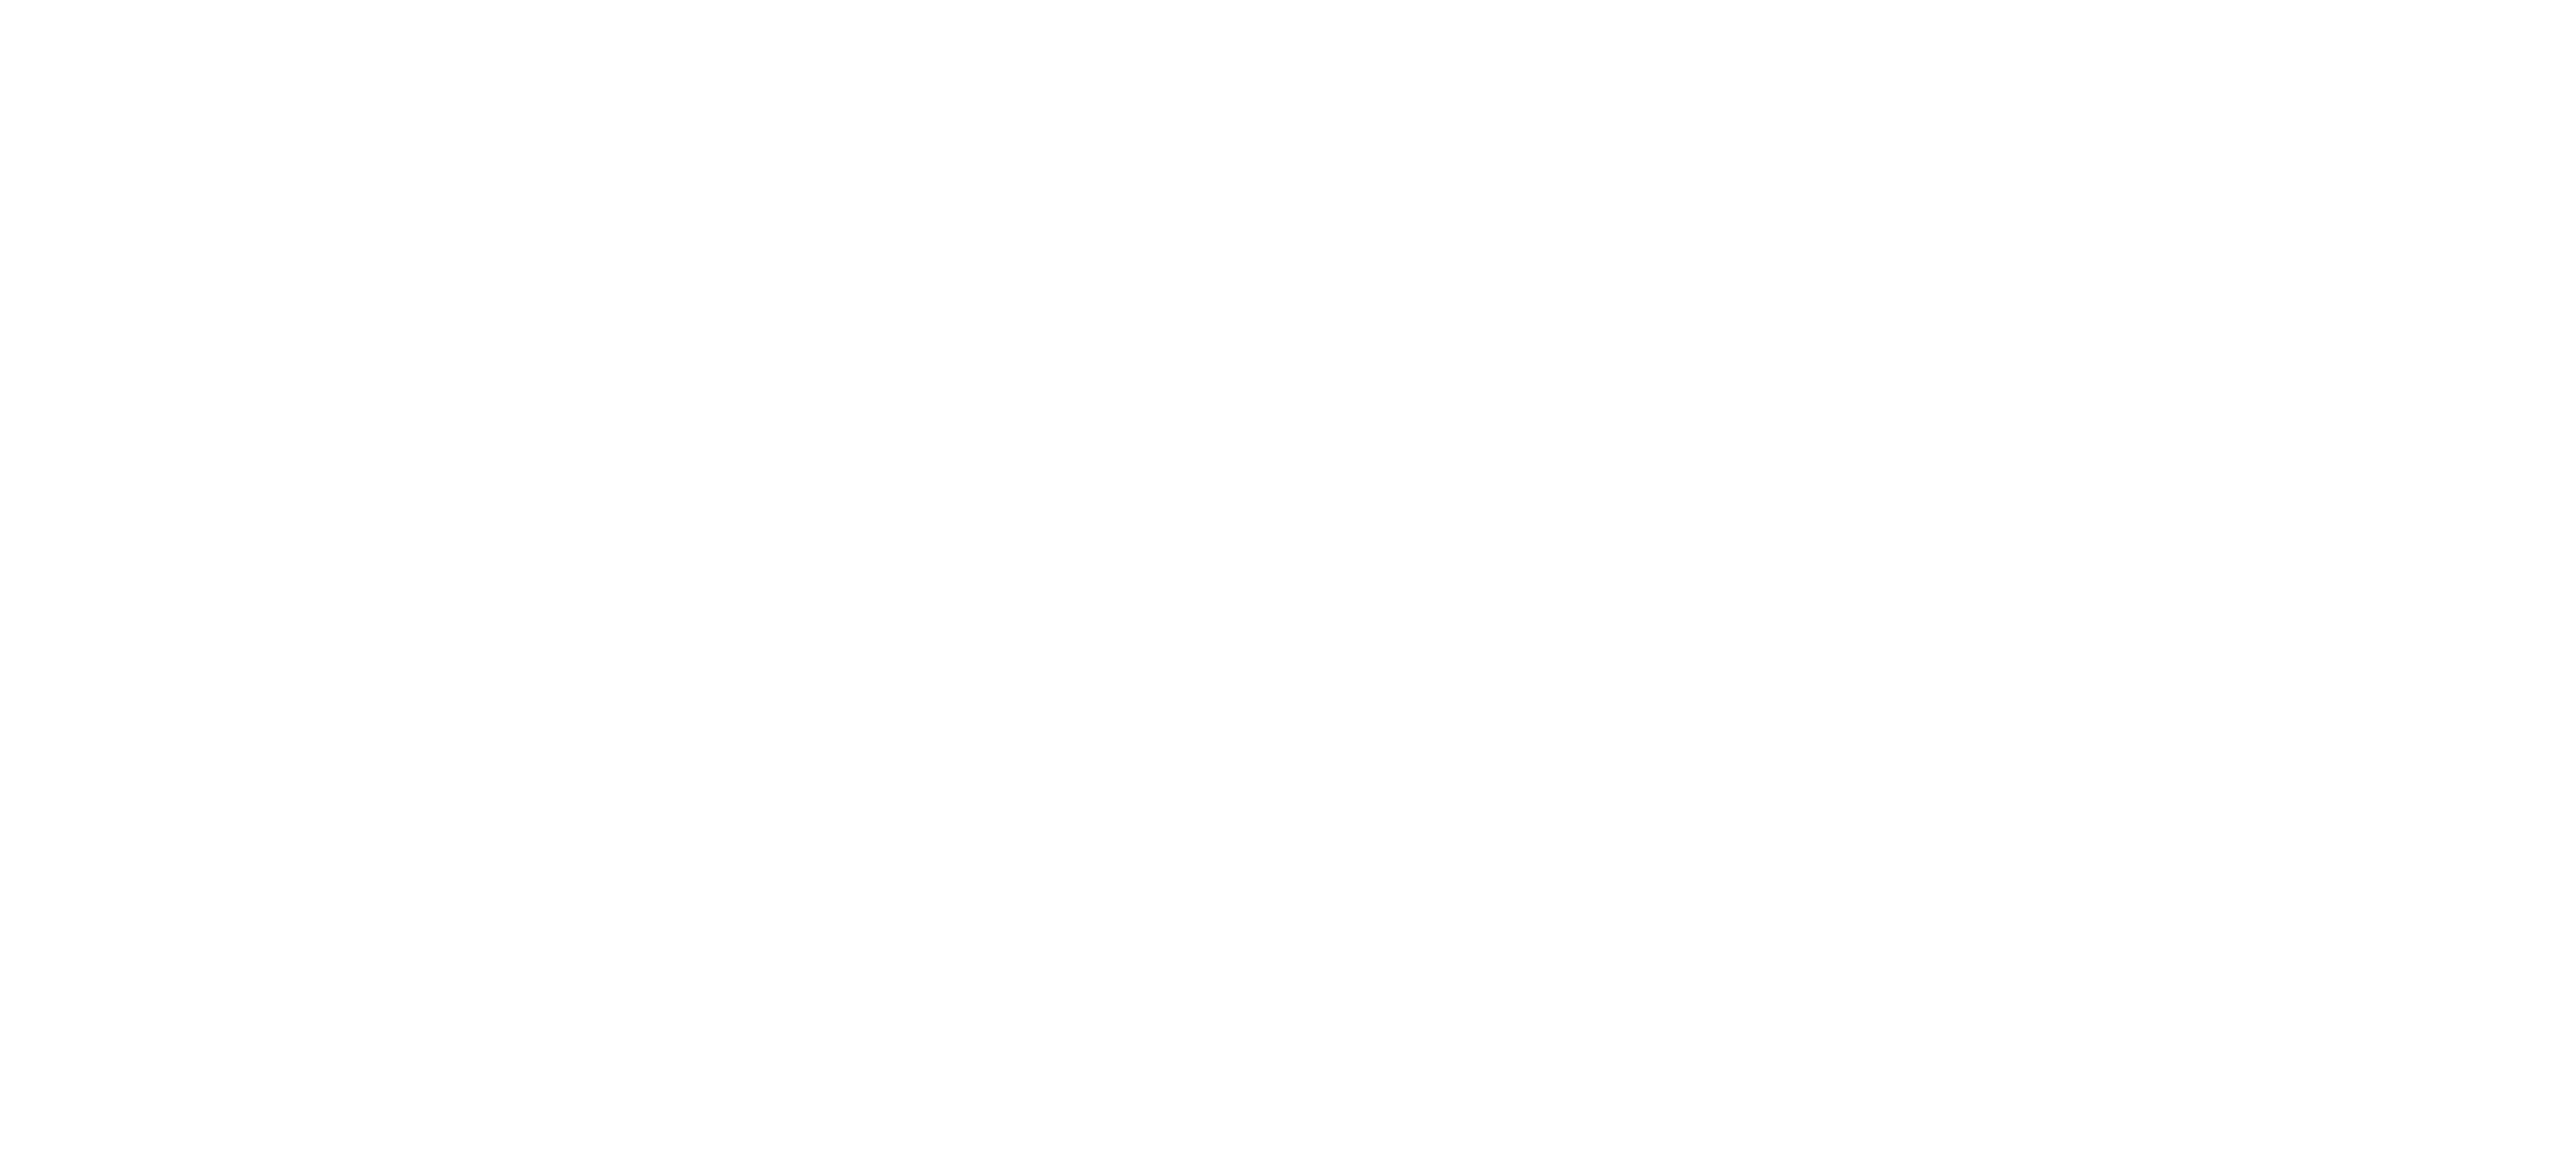 Citron Mauve Logotype